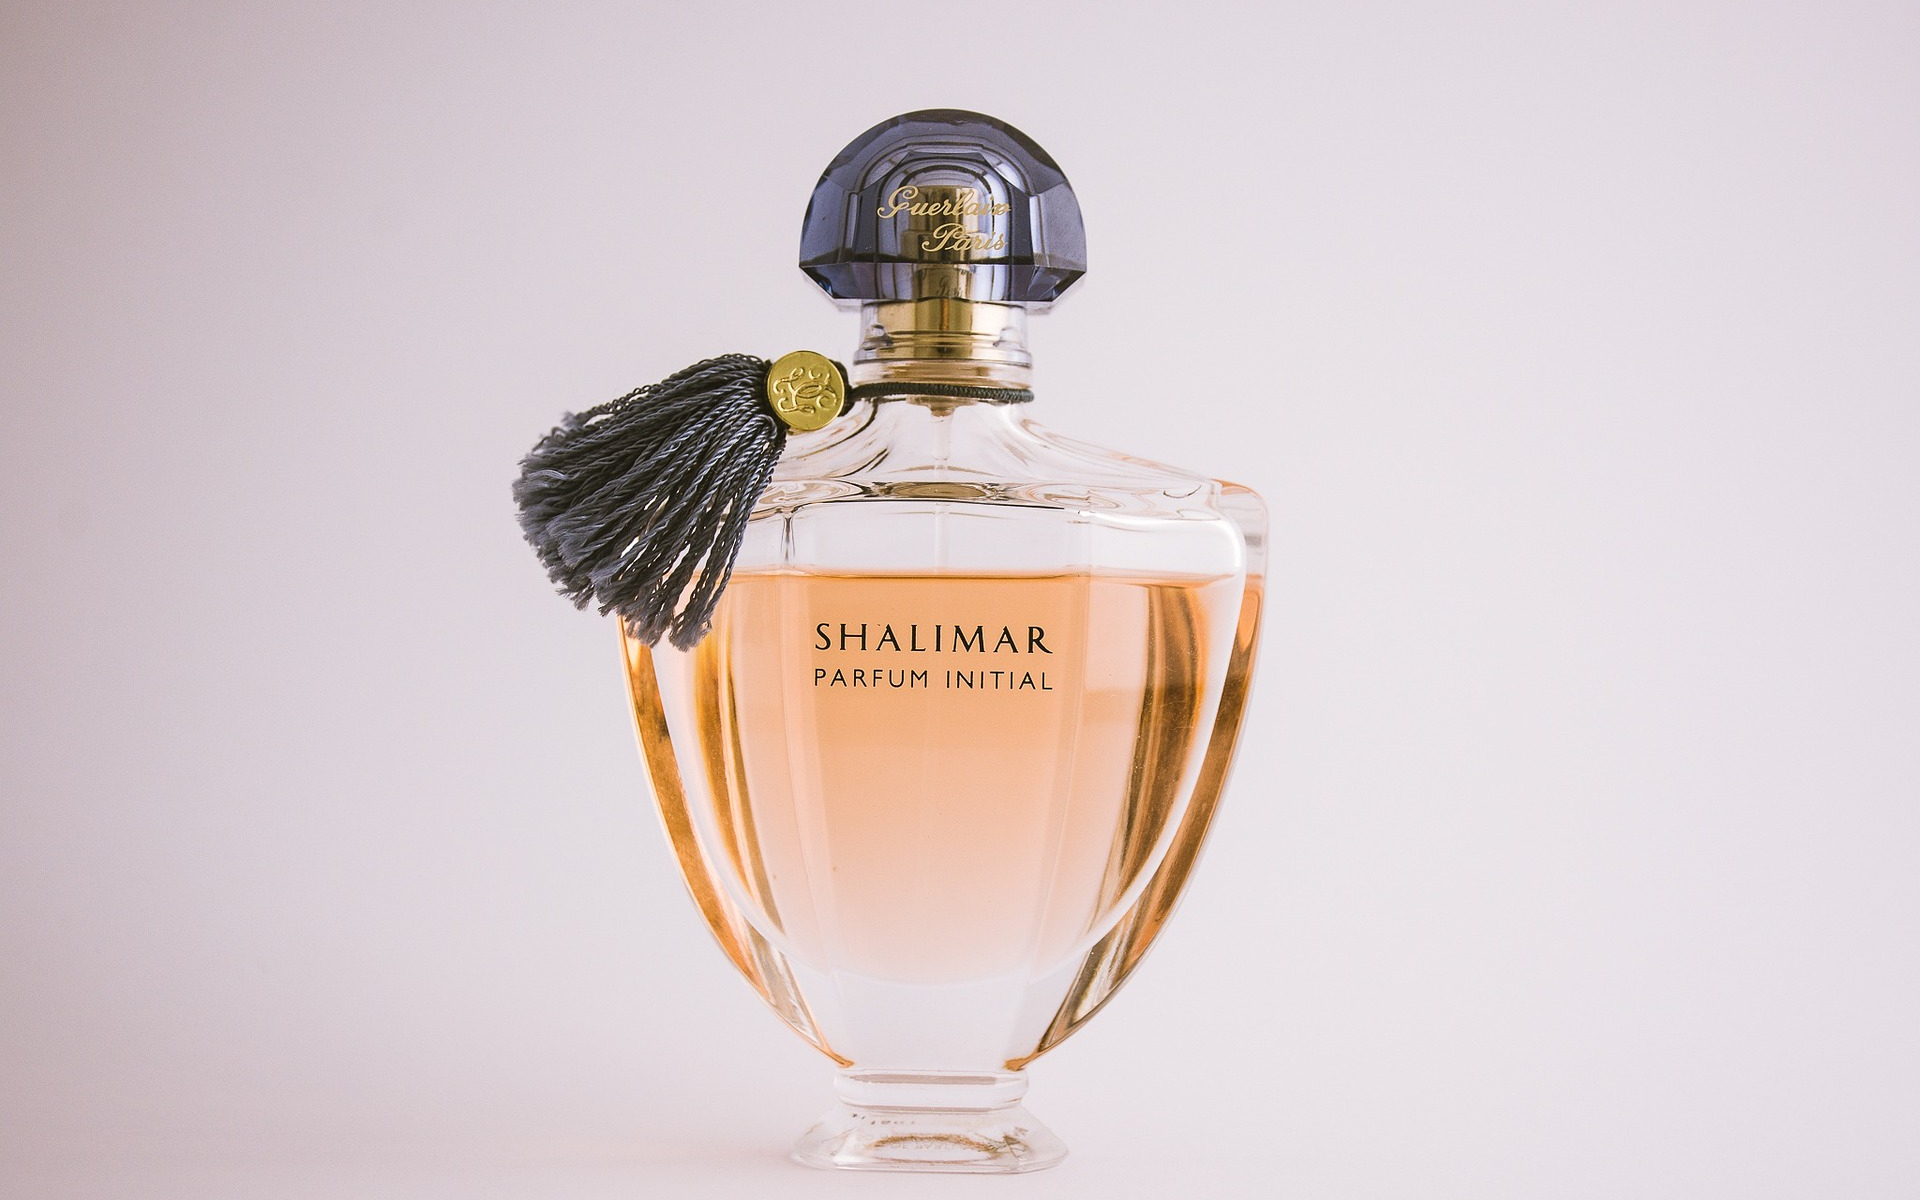 Who Wears Shalimar Perfume?